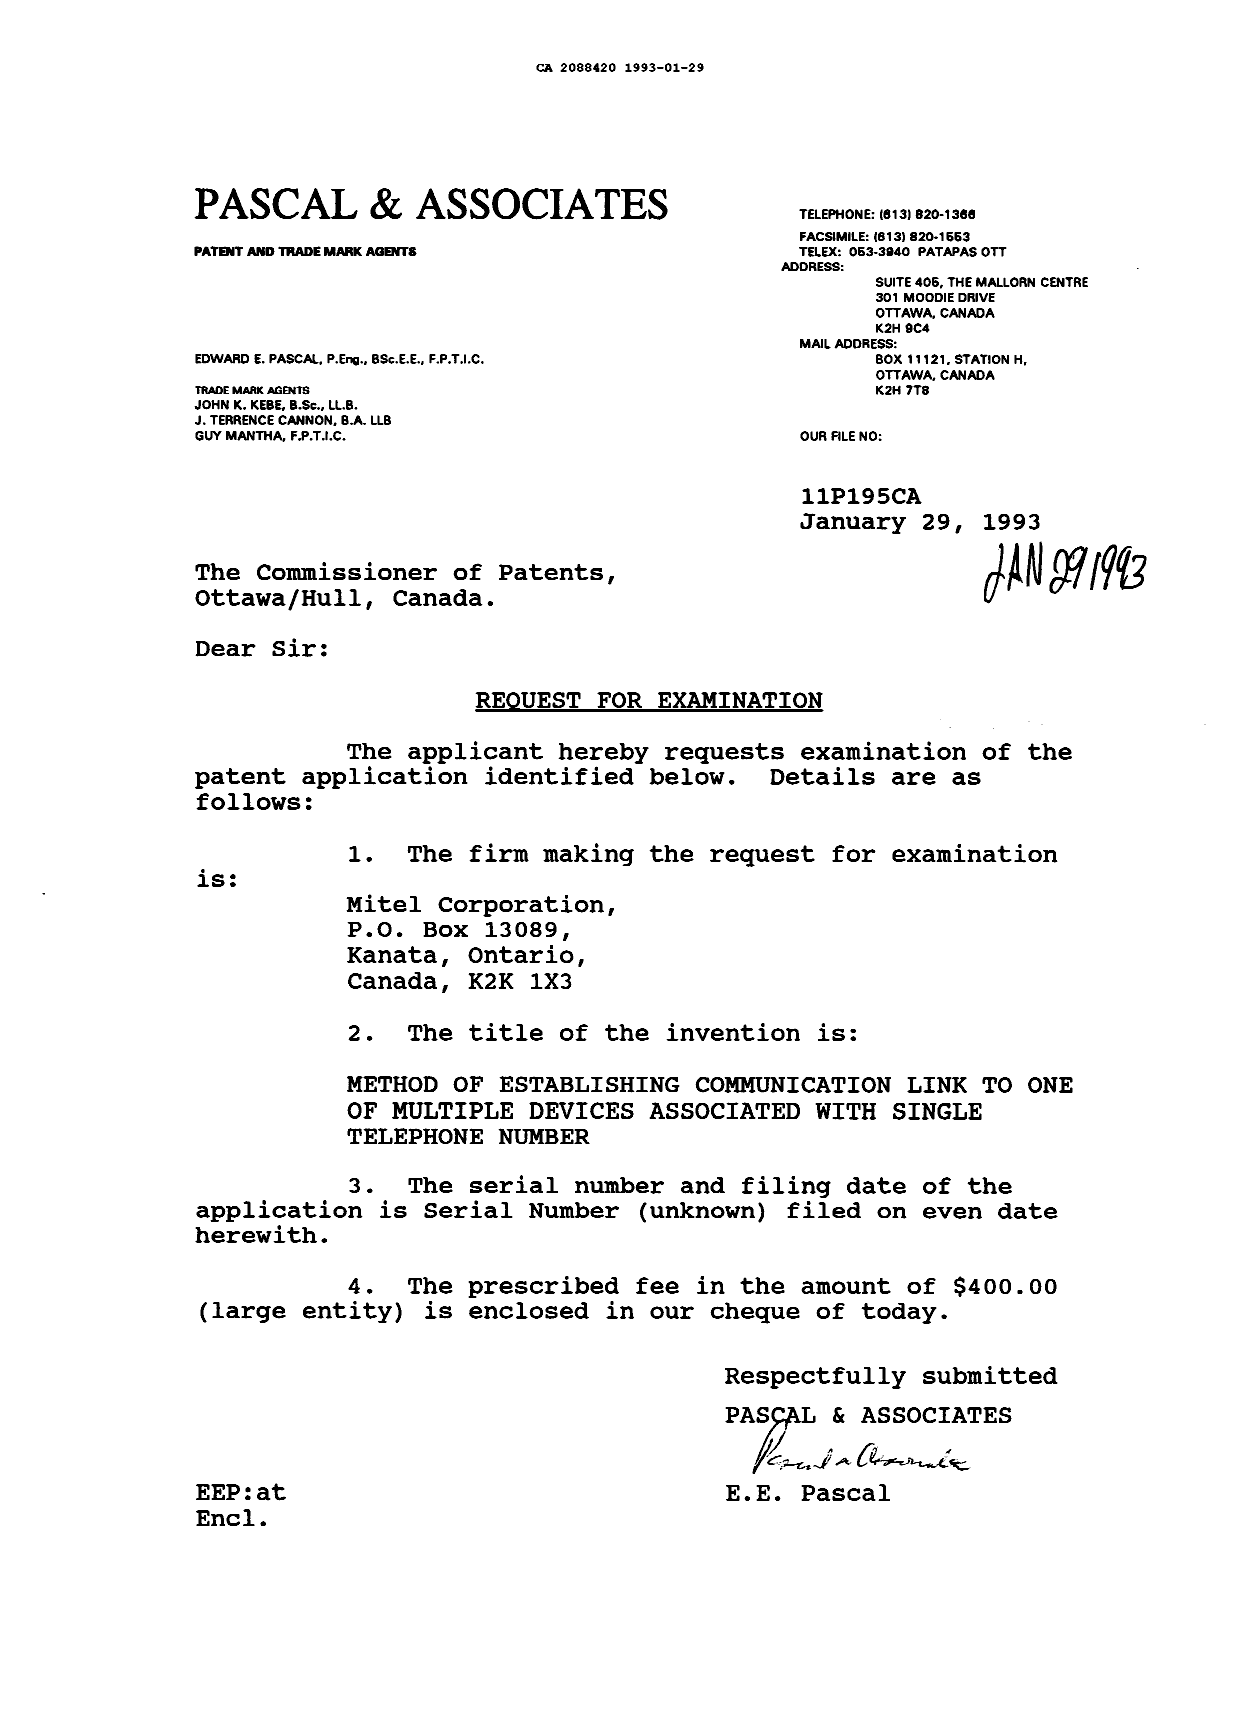 Canadian Patent Document 2088420. Prosecution Correspondence 19930129. Image 1 of 1